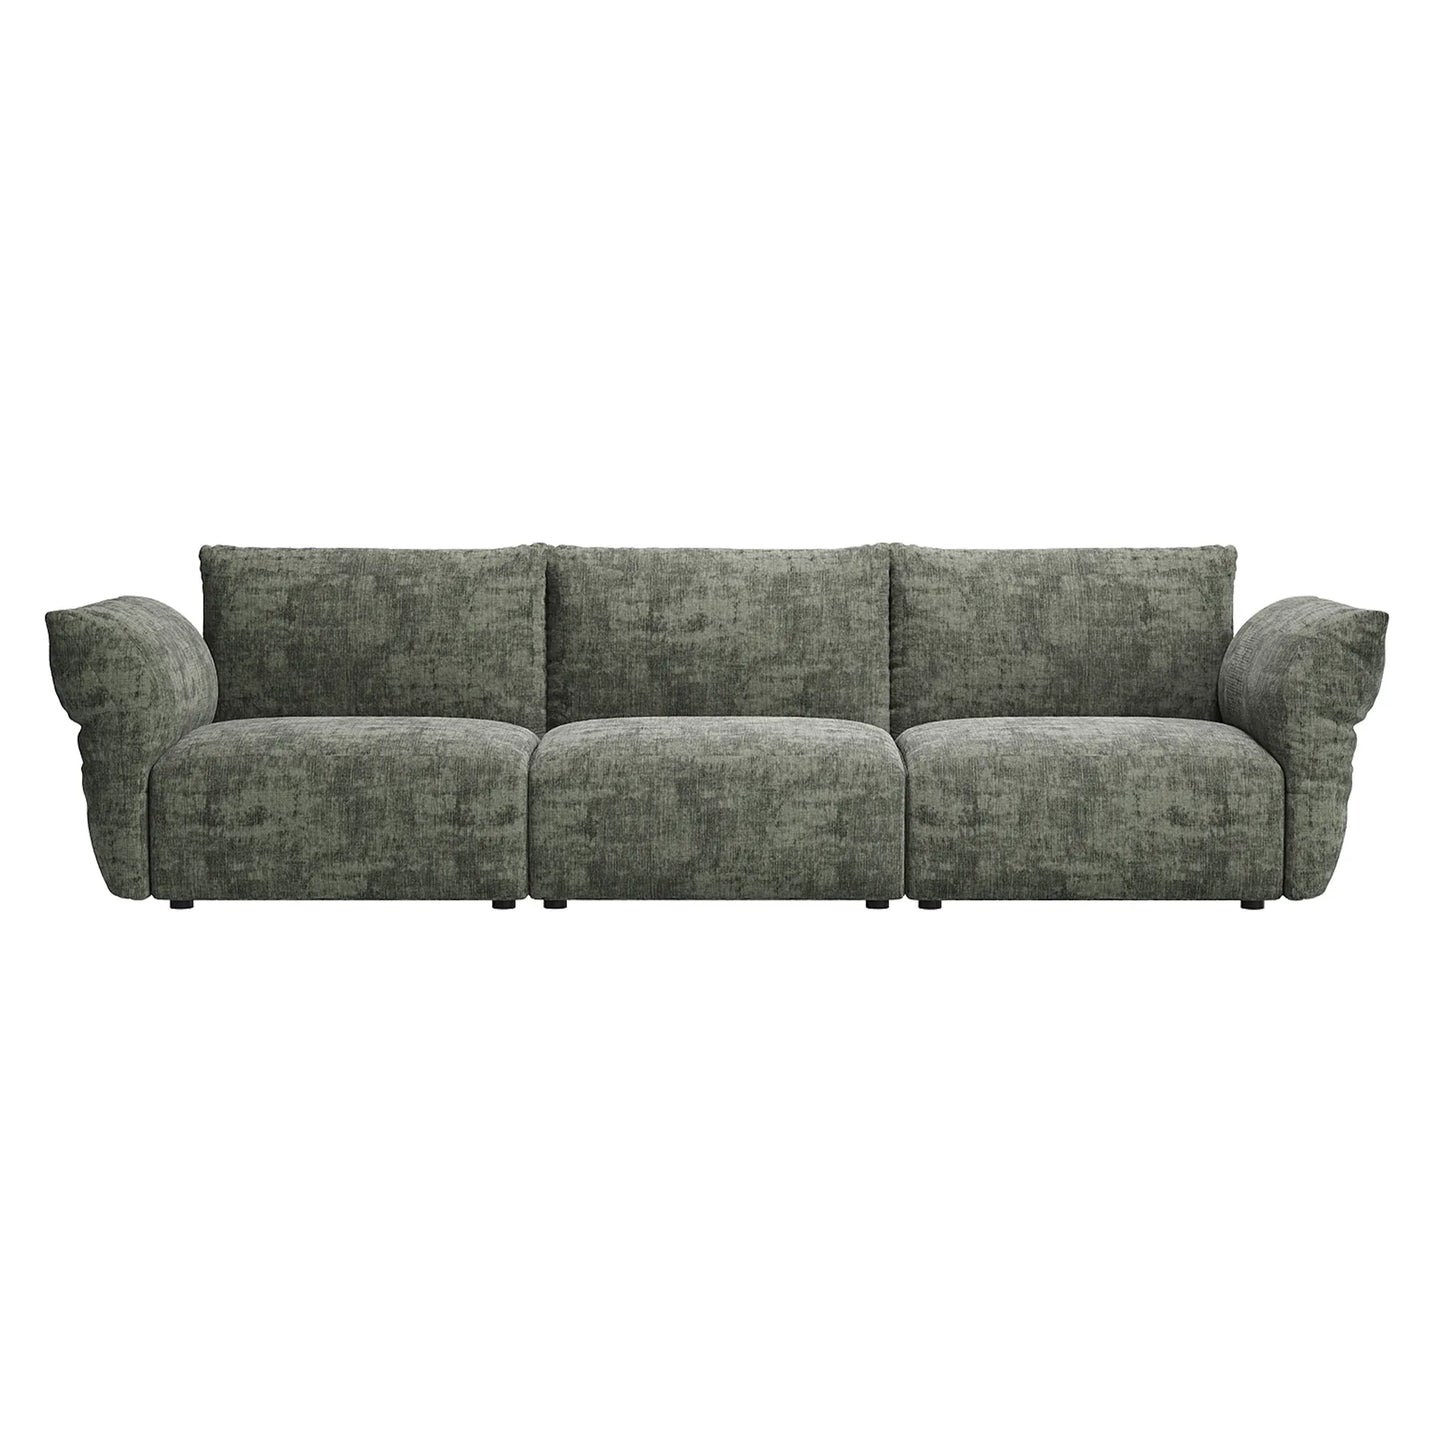 Puff 4 Seater Sofa - Solo Fern